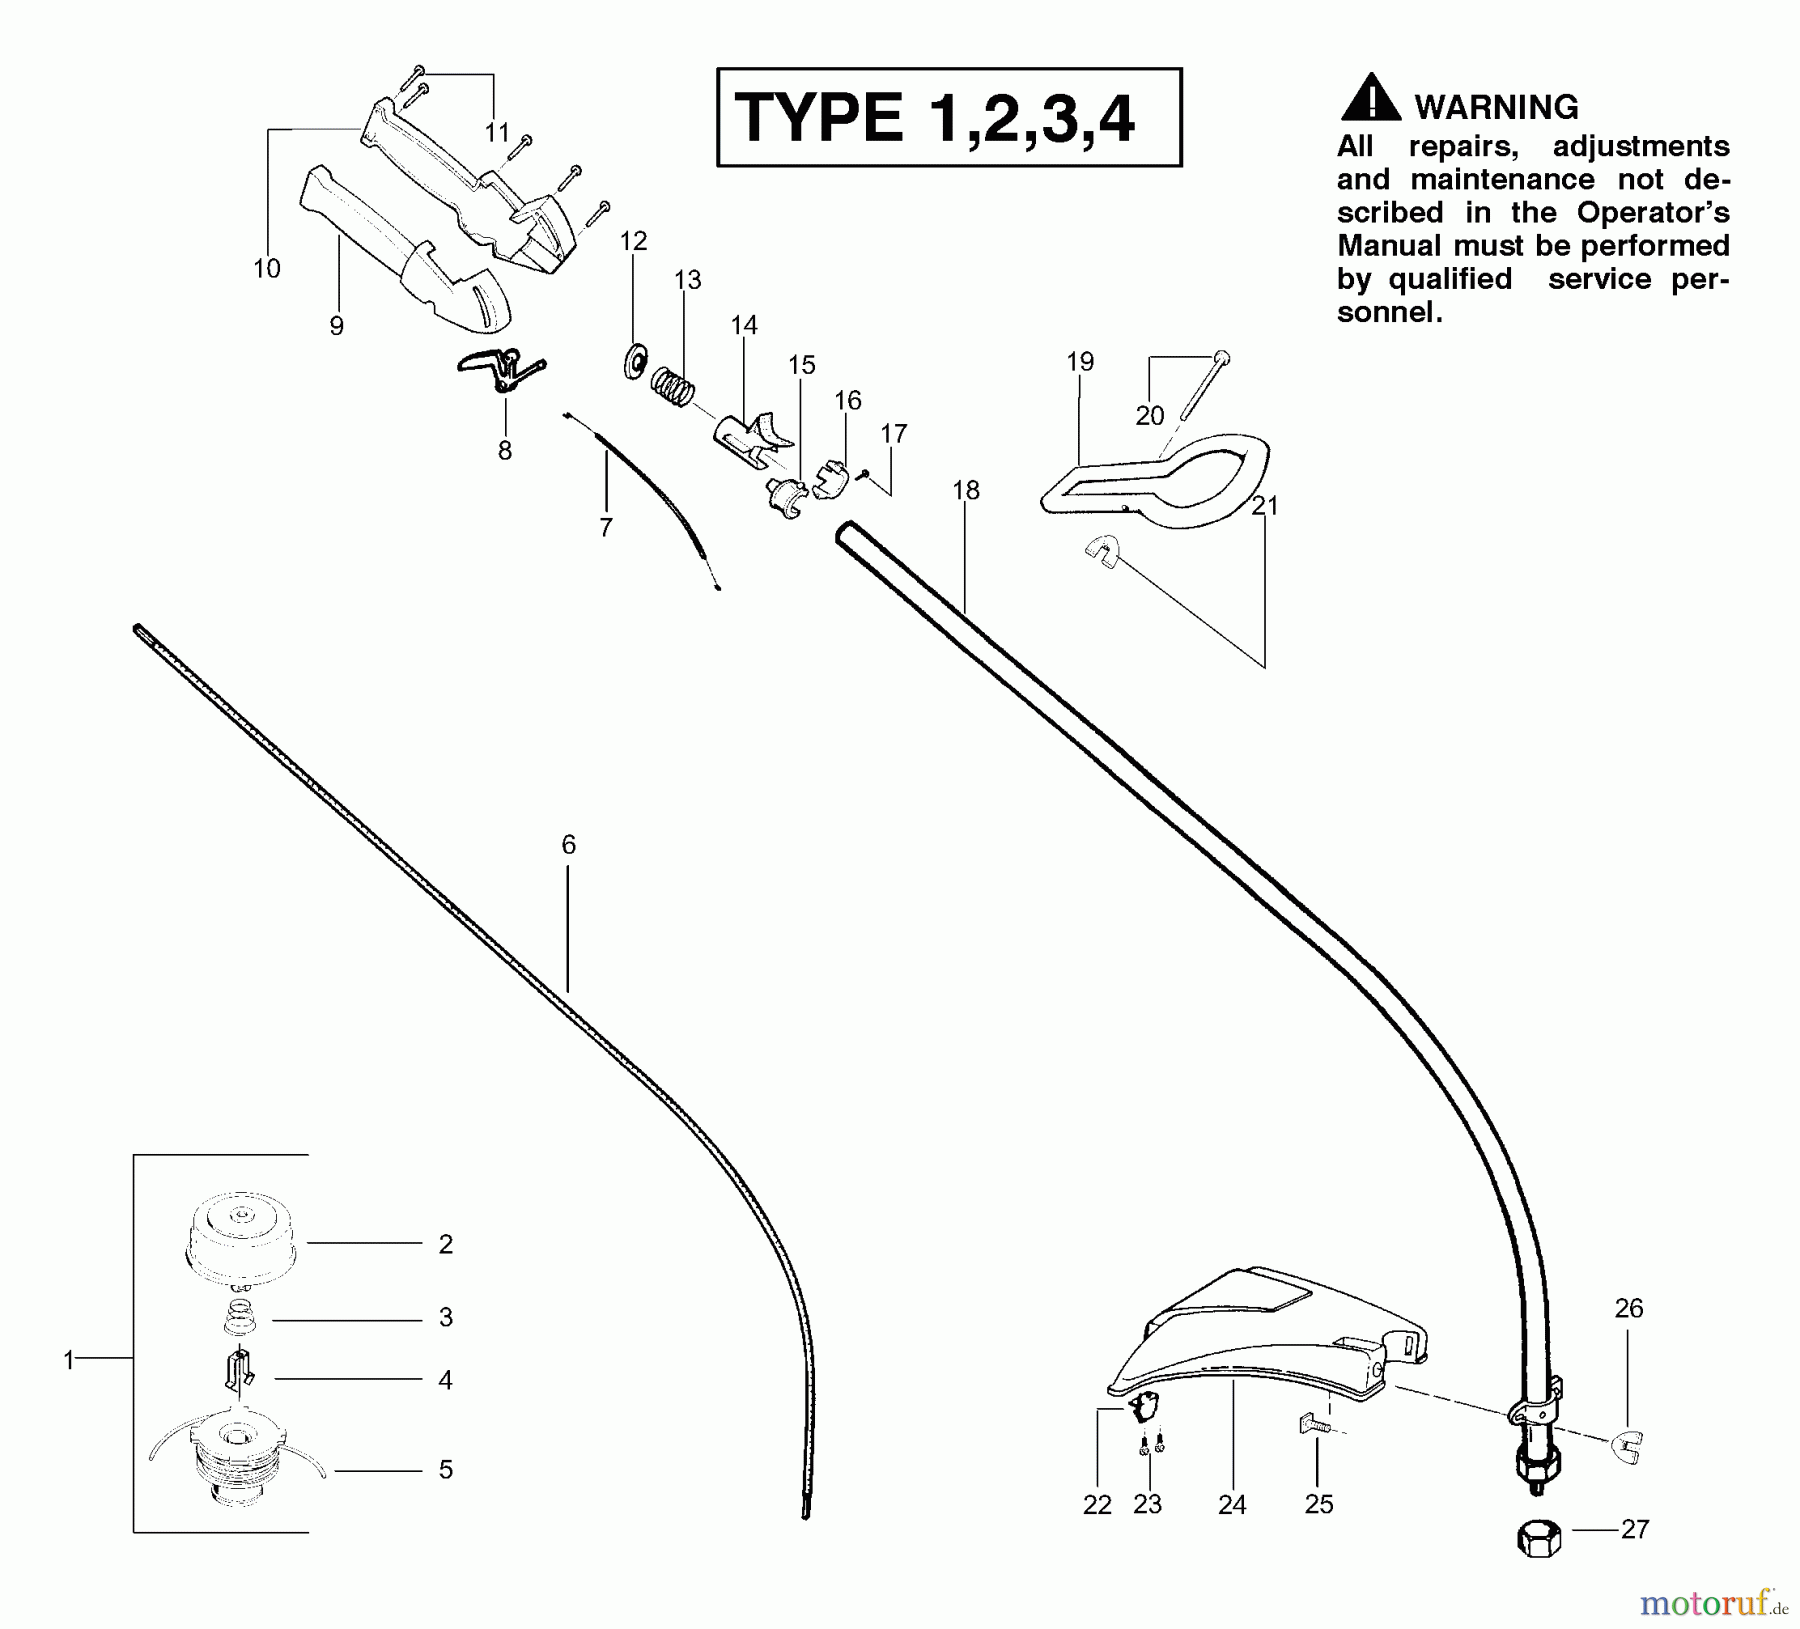  Poulan / Weed Eater Motorsensen, Trimmer XT400 (Type 3) - Weed Eater String Trimmer Handle & Shaft Assembly